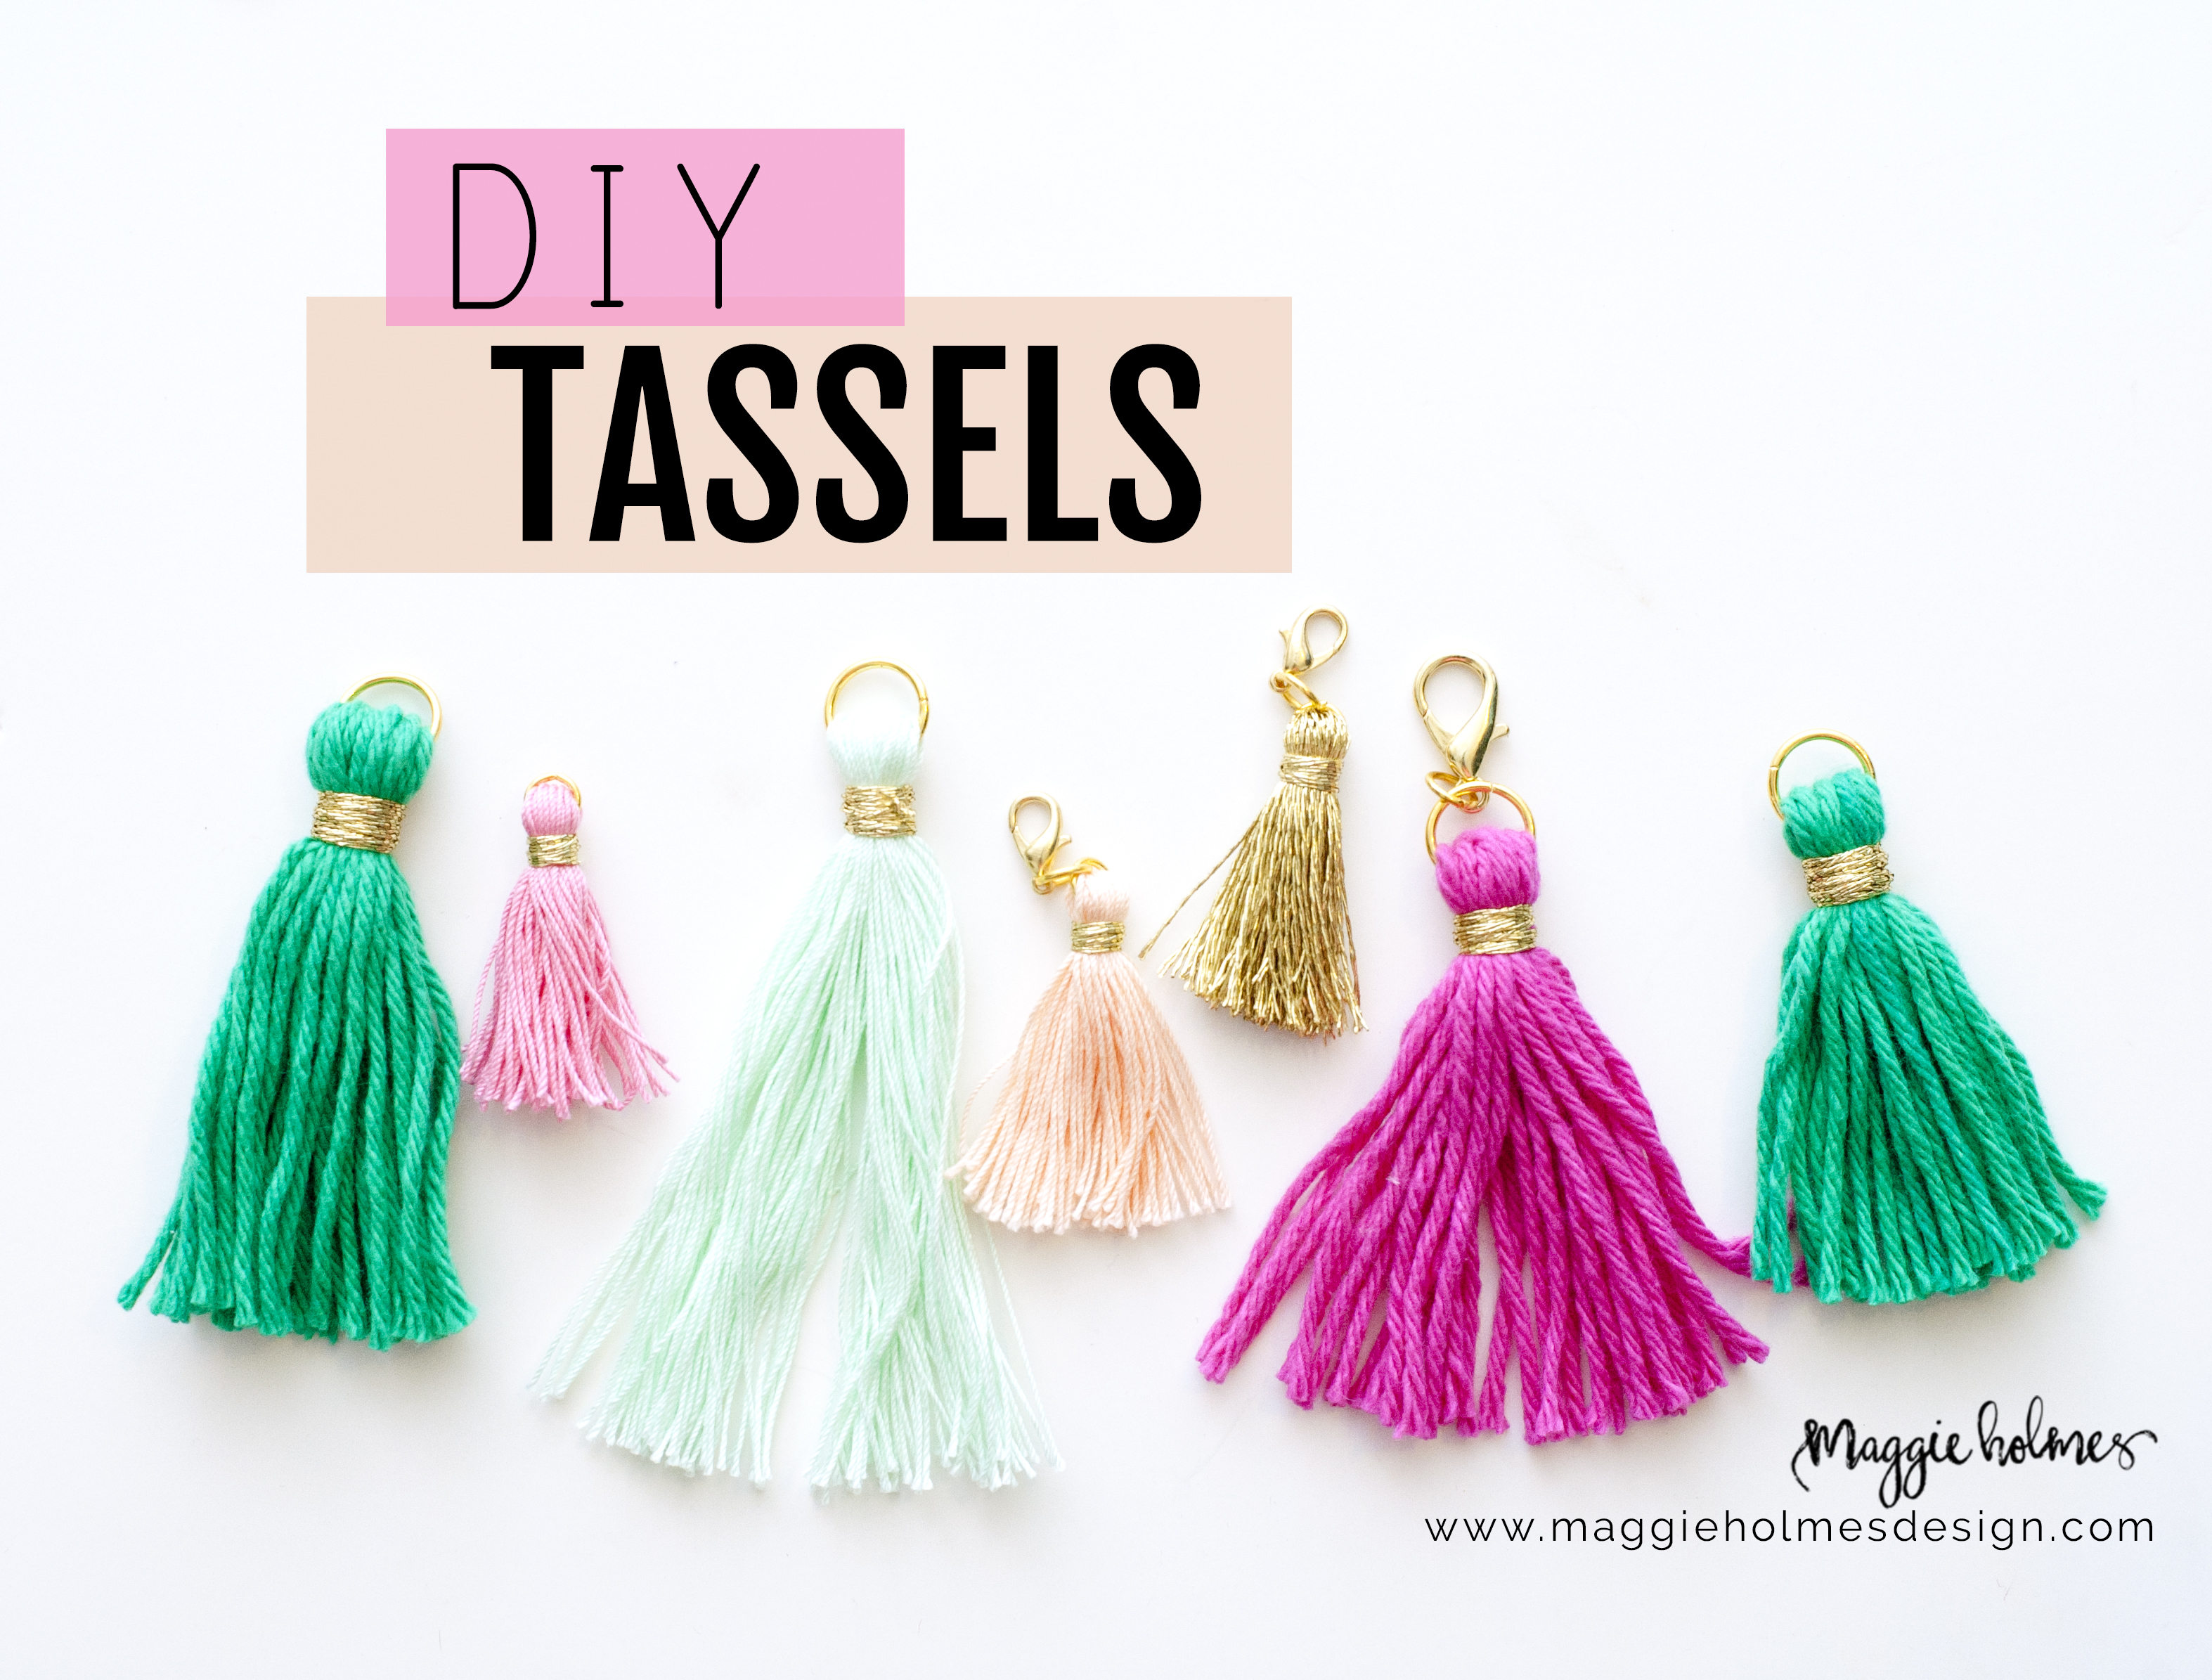 How to Make DIY Tassels Tutorial » Maggie Holmes Design